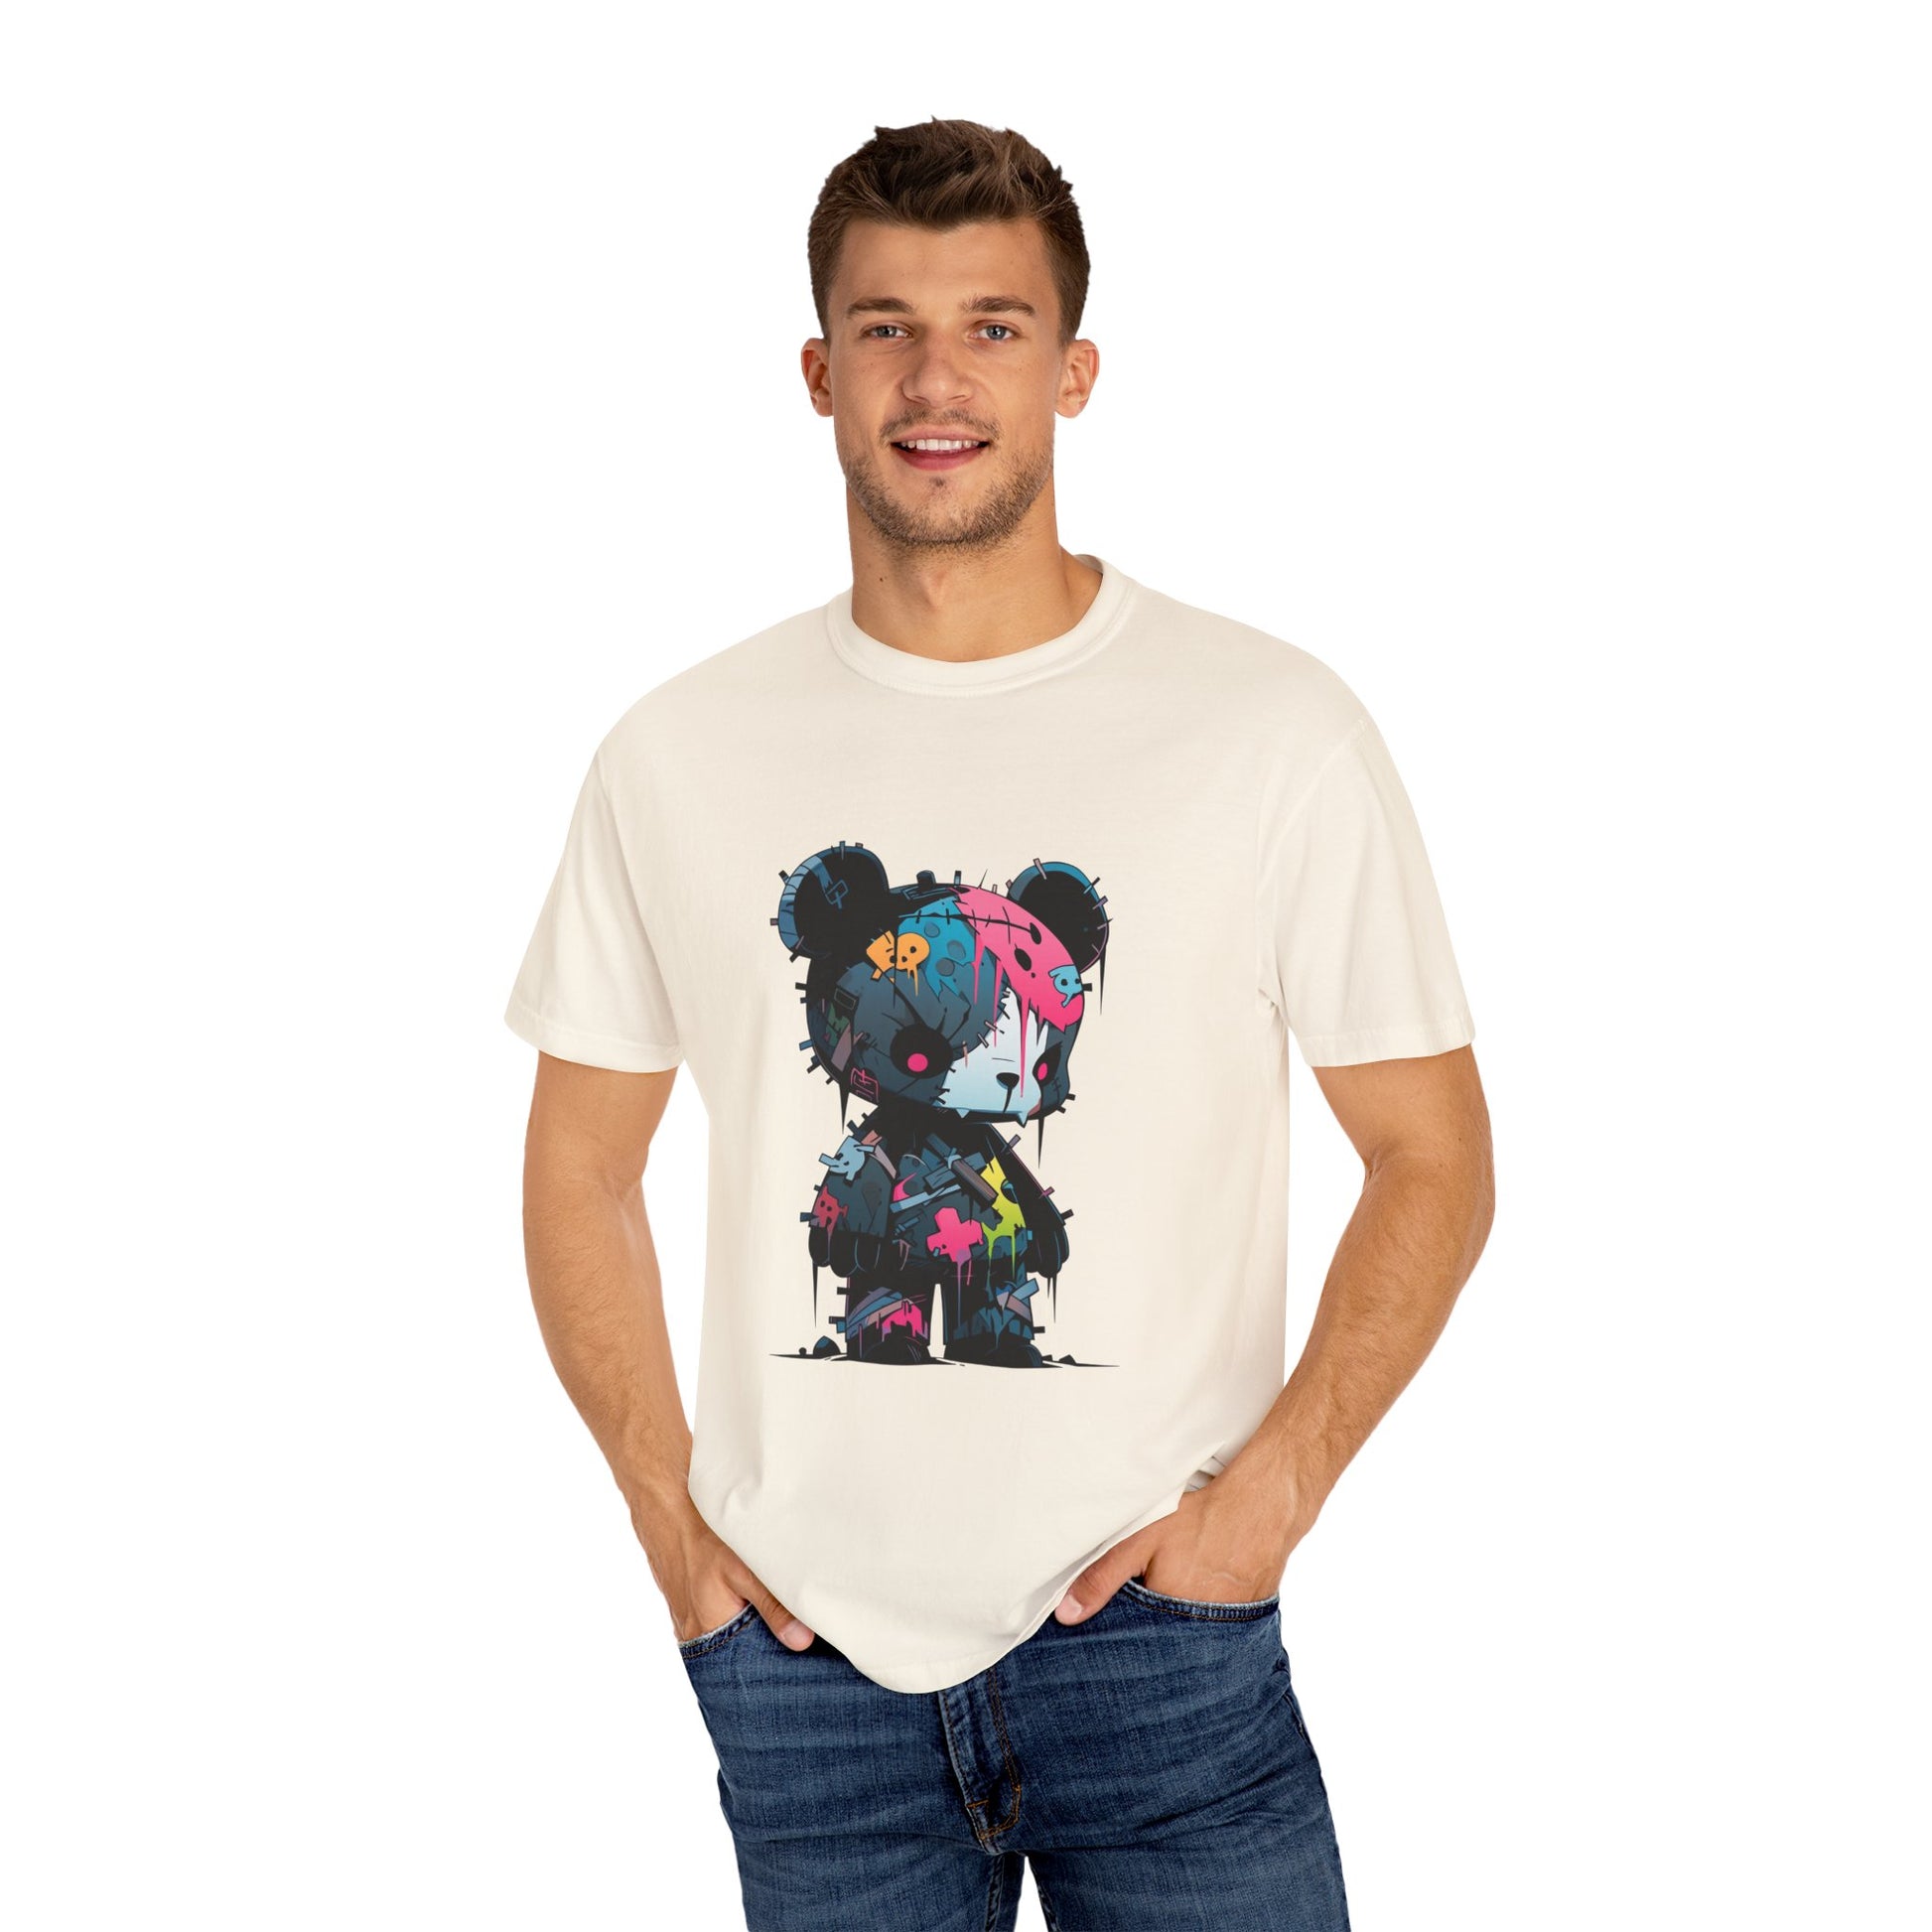 Hip Hop Teddy Bear Graphic Unisex Garment-dyed T-shirt Cotton Funny Humorous Graphic Soft Premium Unisex Men Women Ivory T-shirt Birthday Gift-45